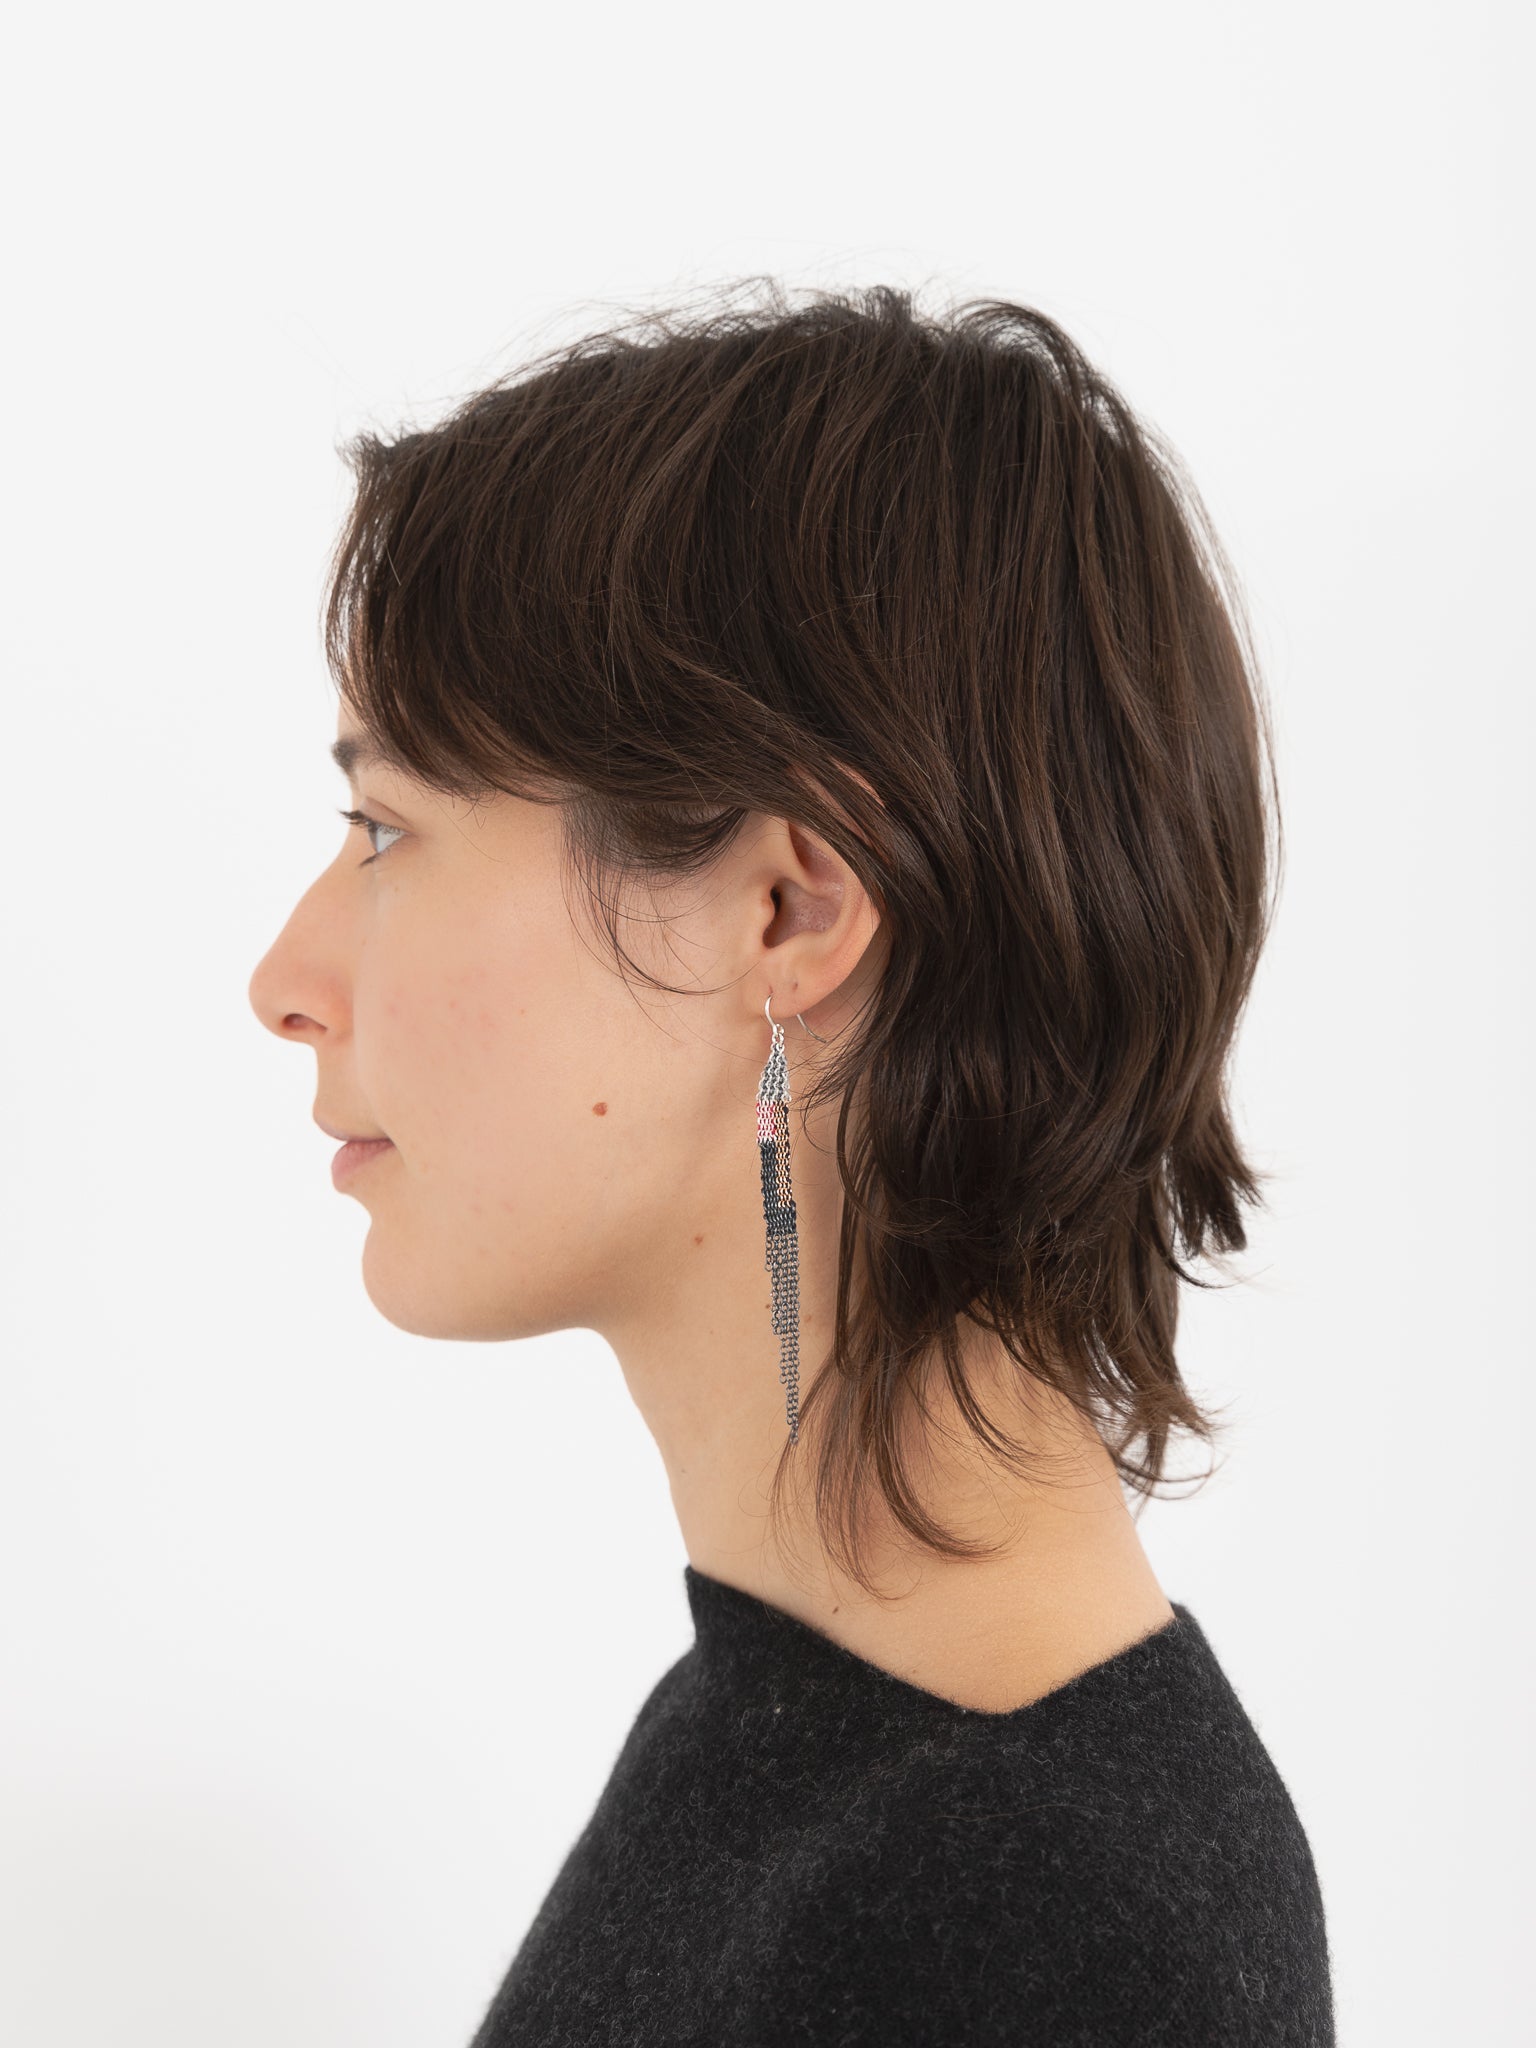 Stephanie Schneider Earrings, No. 008.07 HRR - Worthwhile